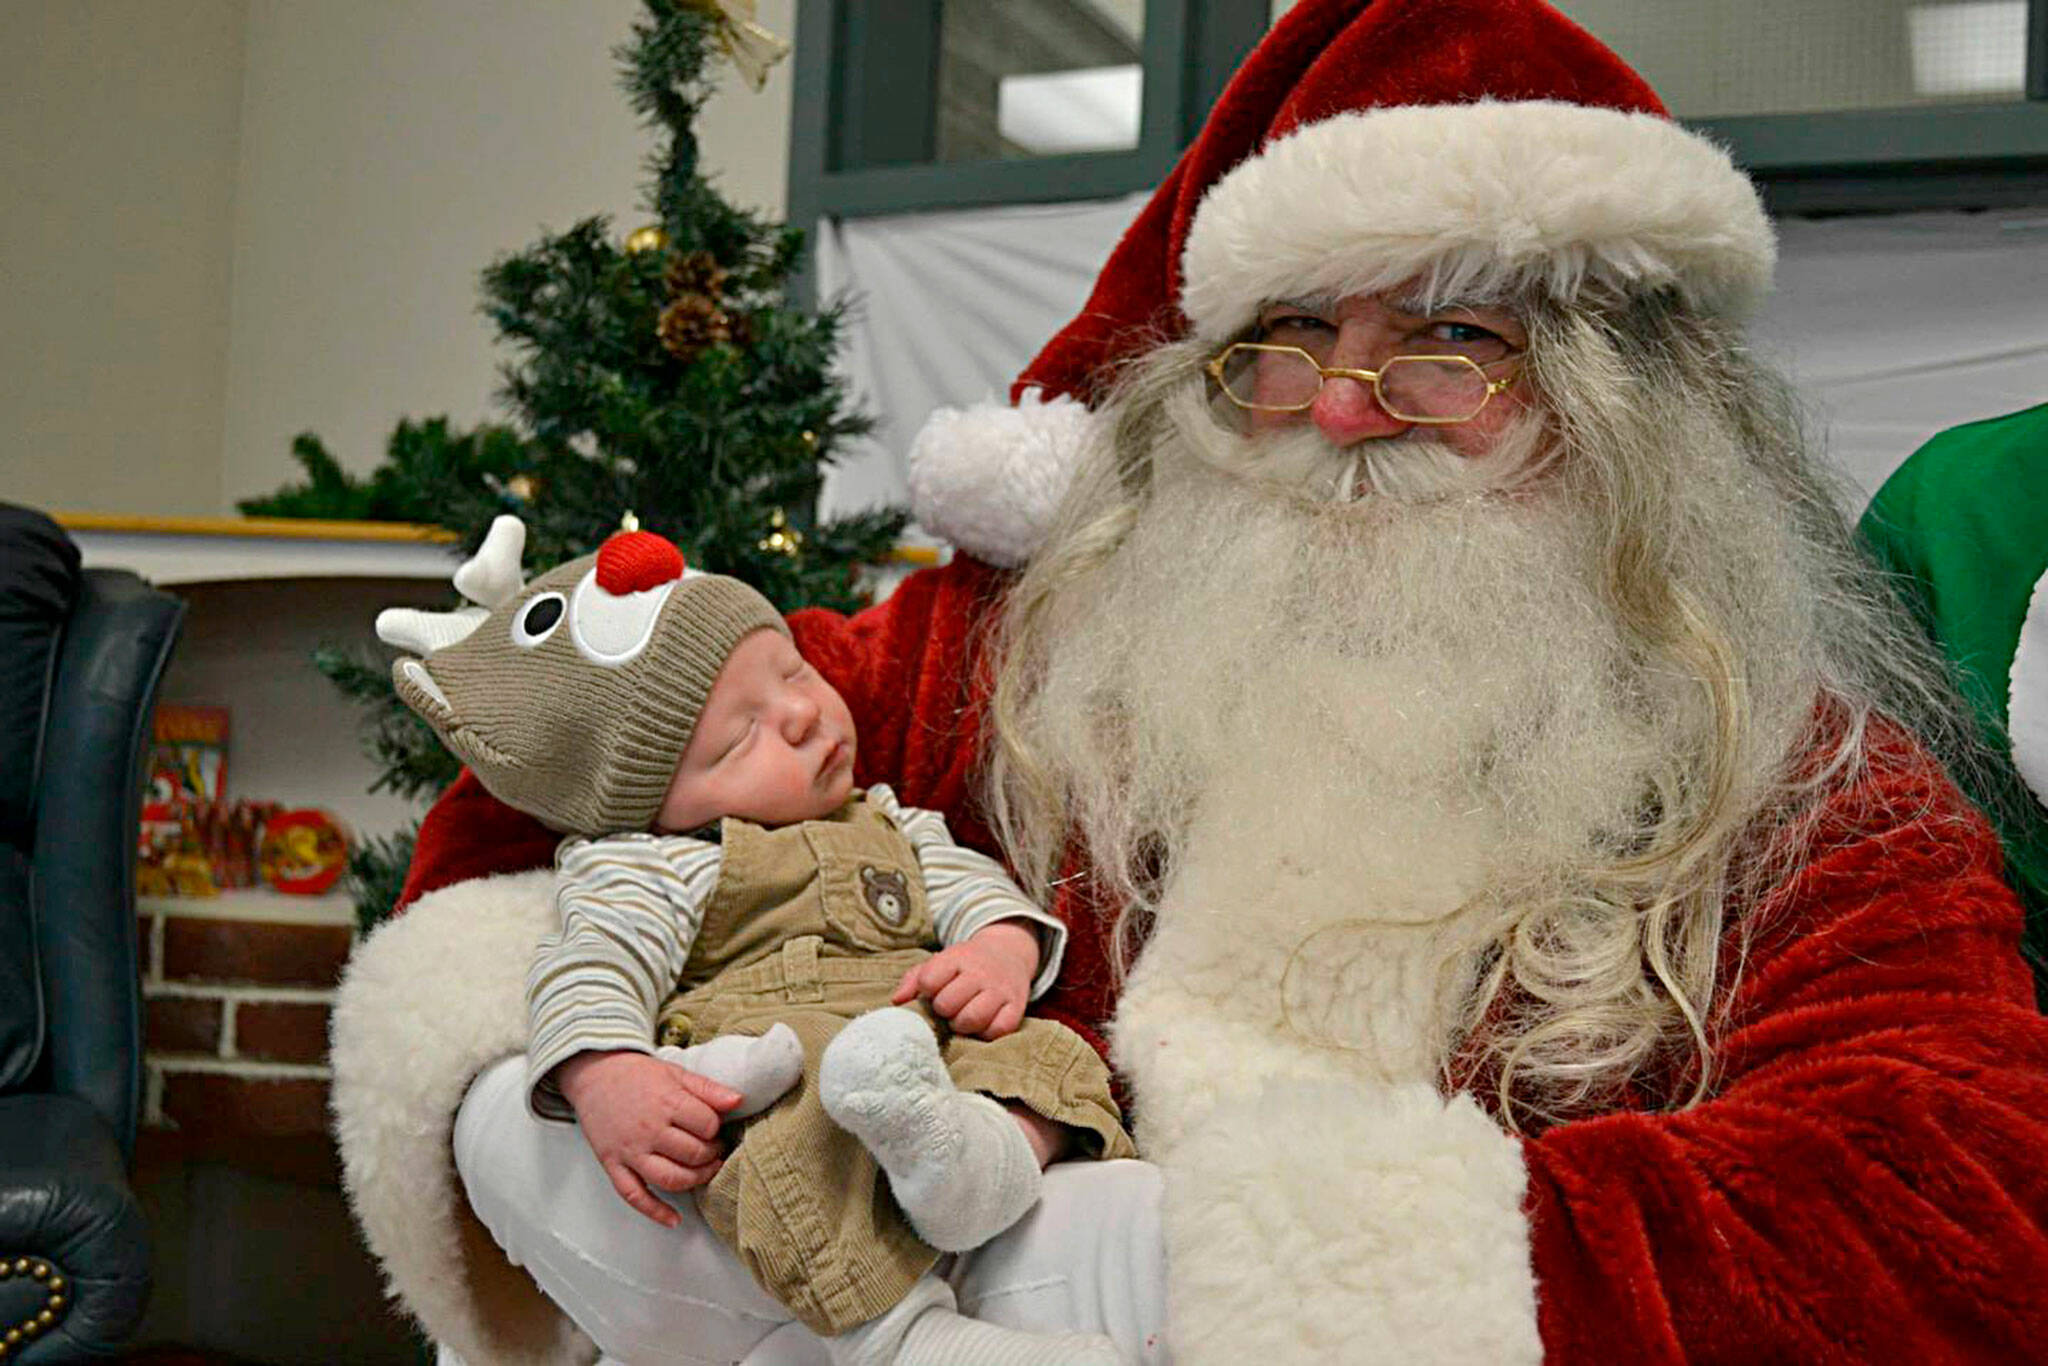 Santa Claus, aka George Stuber, holds a newborn baby at the Breakfast with Santa event in 2014. Sequim Gazette photo by Matthew Nash